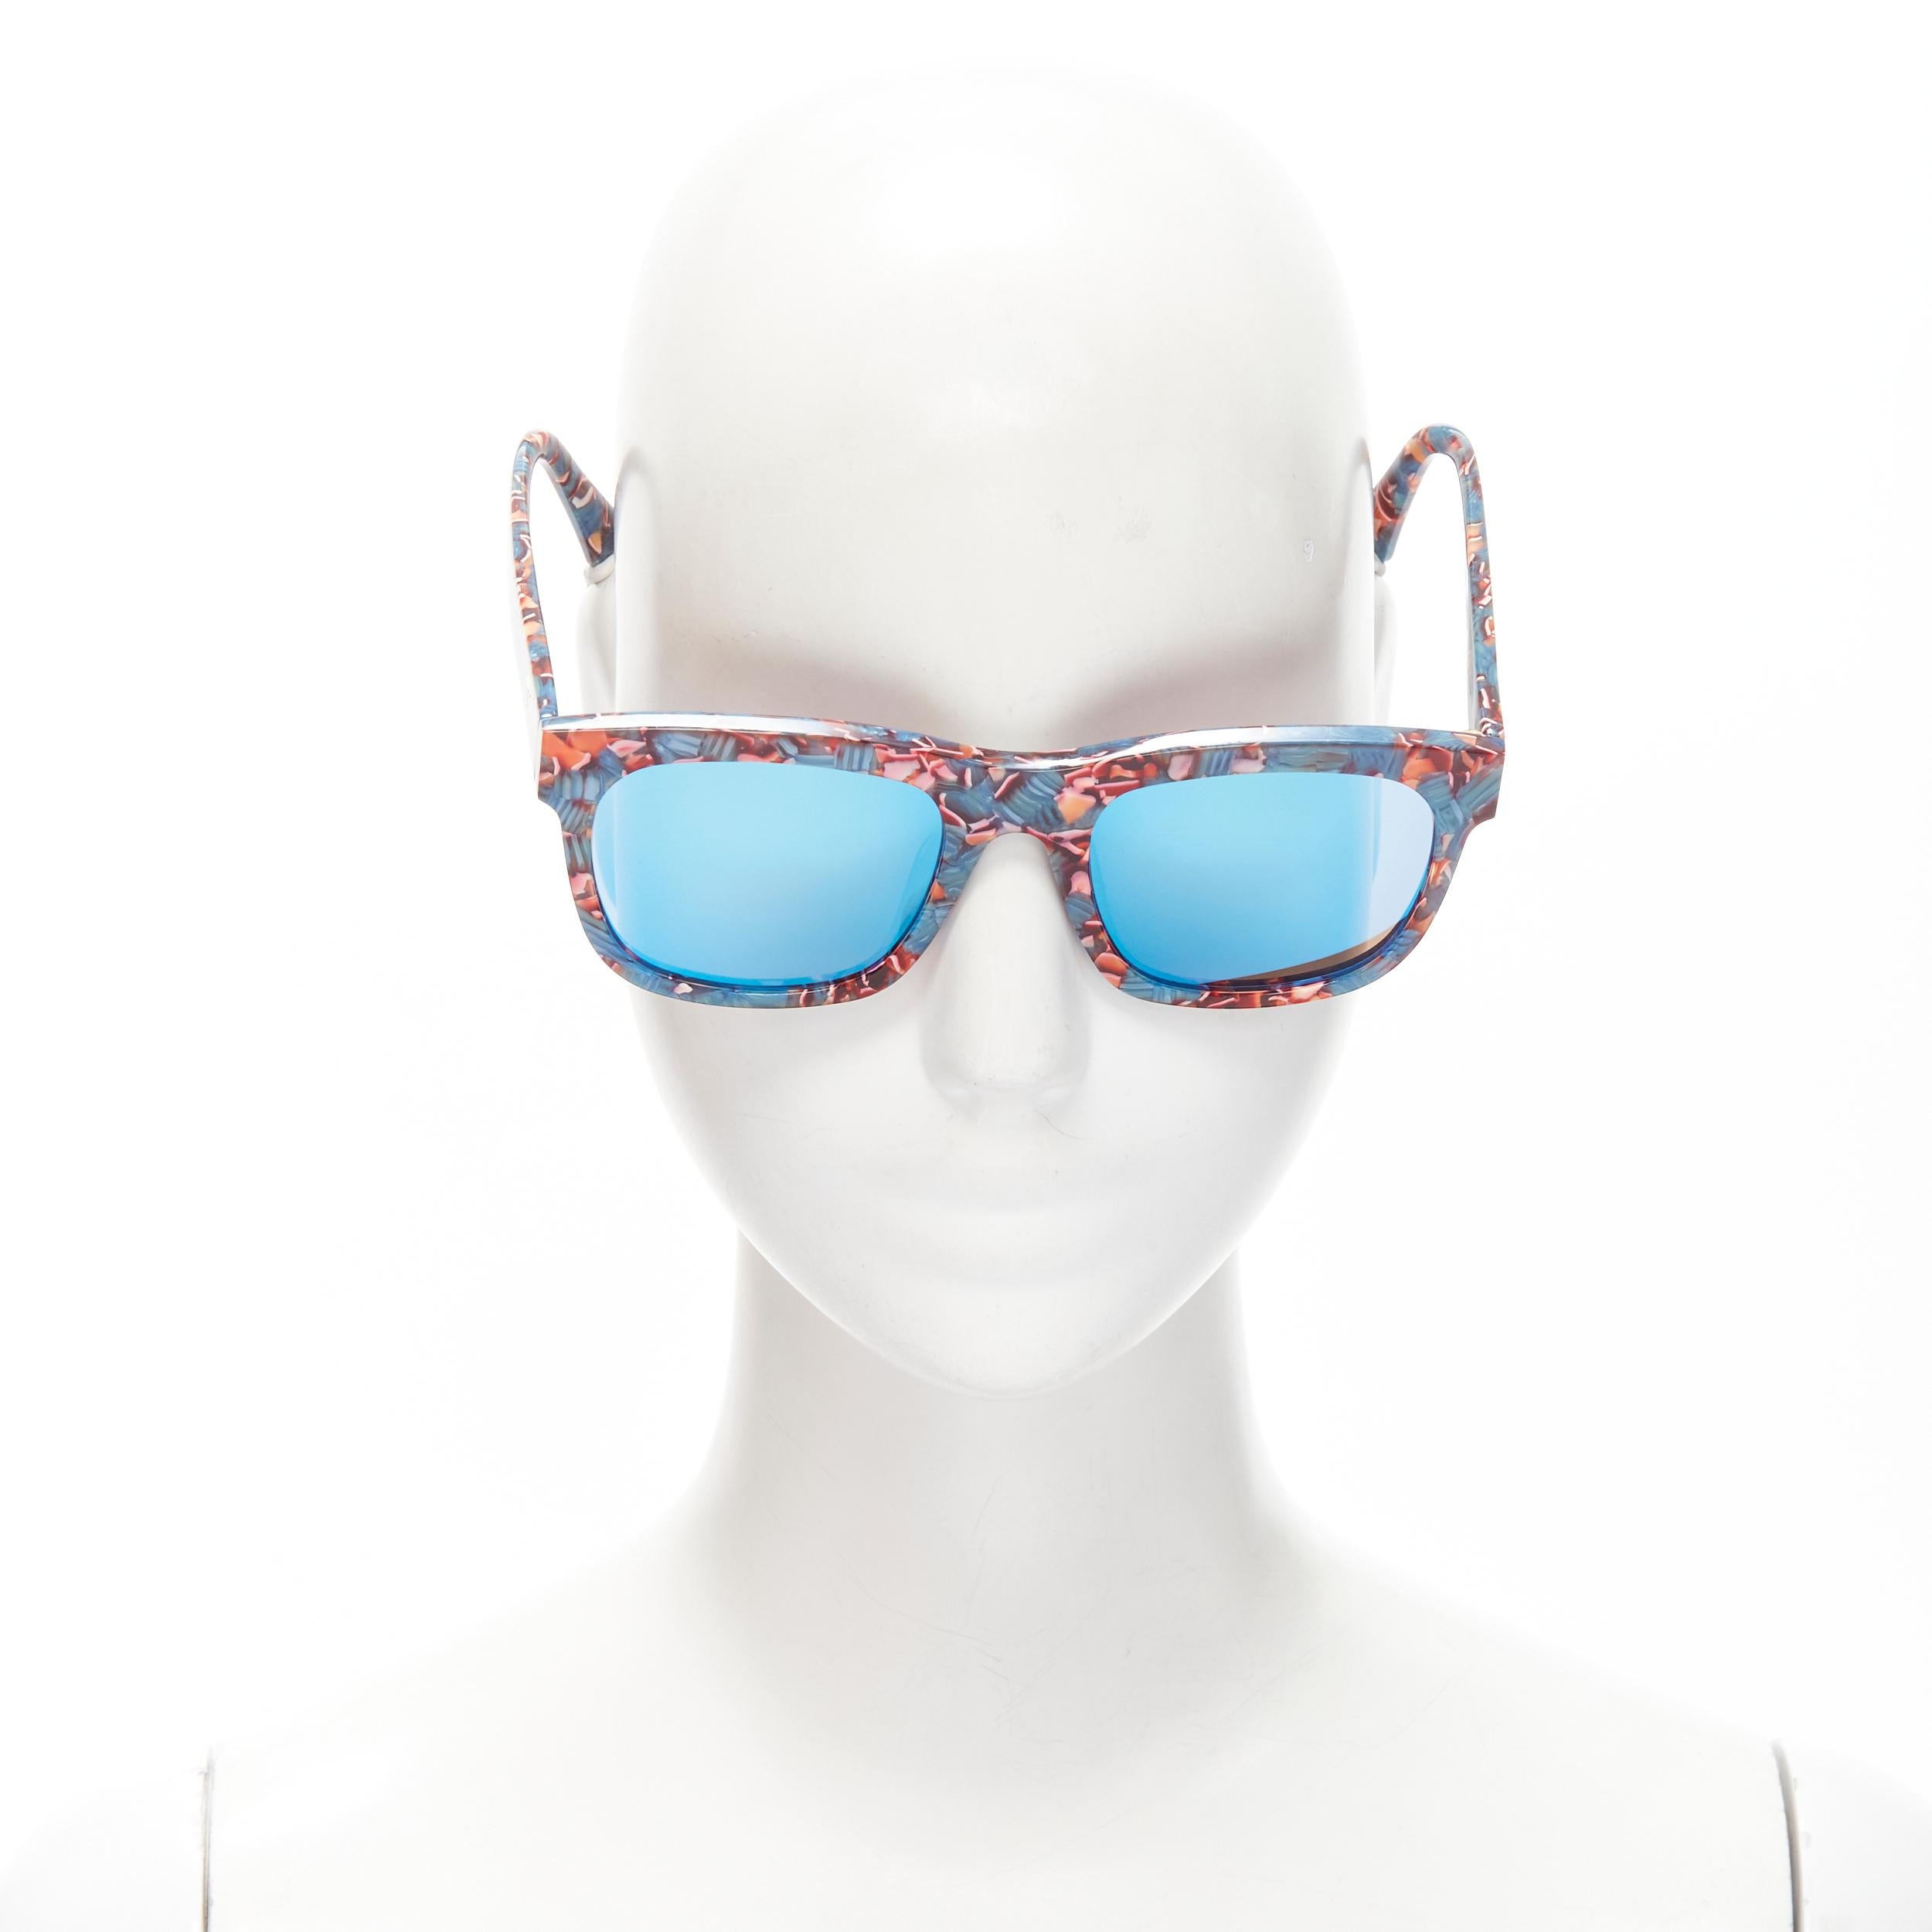 Louis Vuitton Men's Sunglasses for sale in East Newark, New York